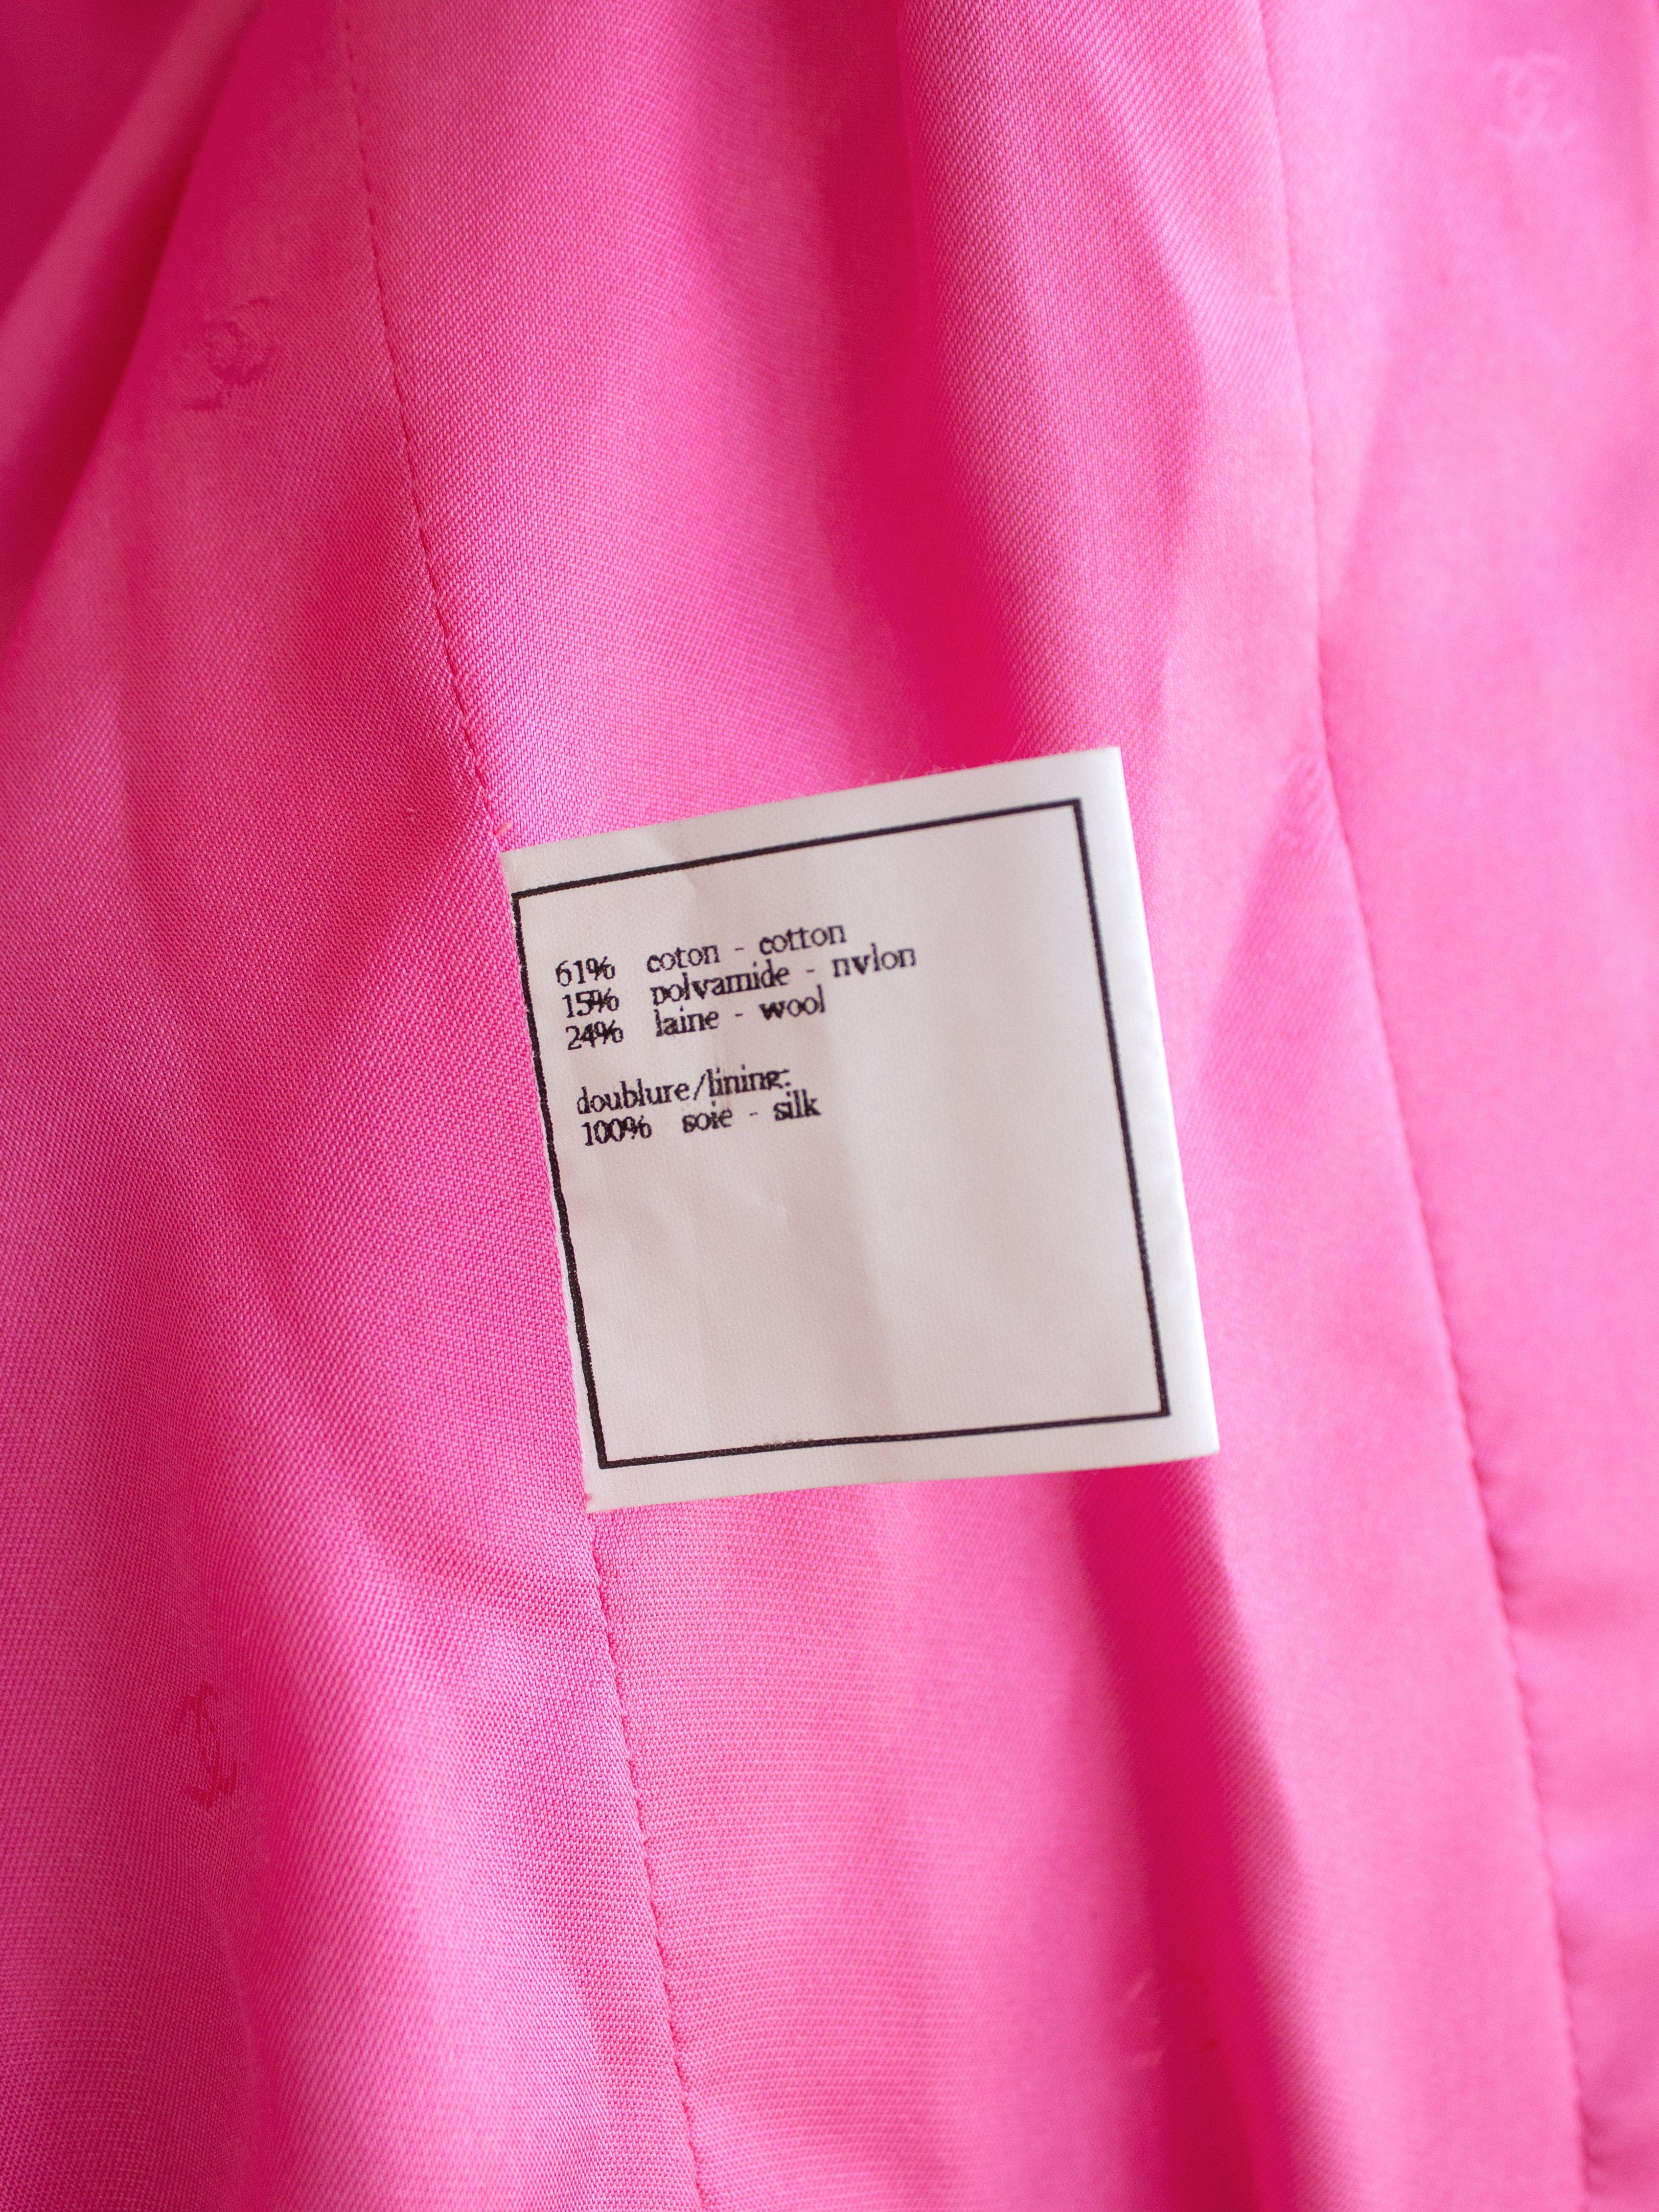 Chanel Vintage S/S 1995 Pink Barbie Gold Zip Tweed 95P Jacket Skirt Suit 13